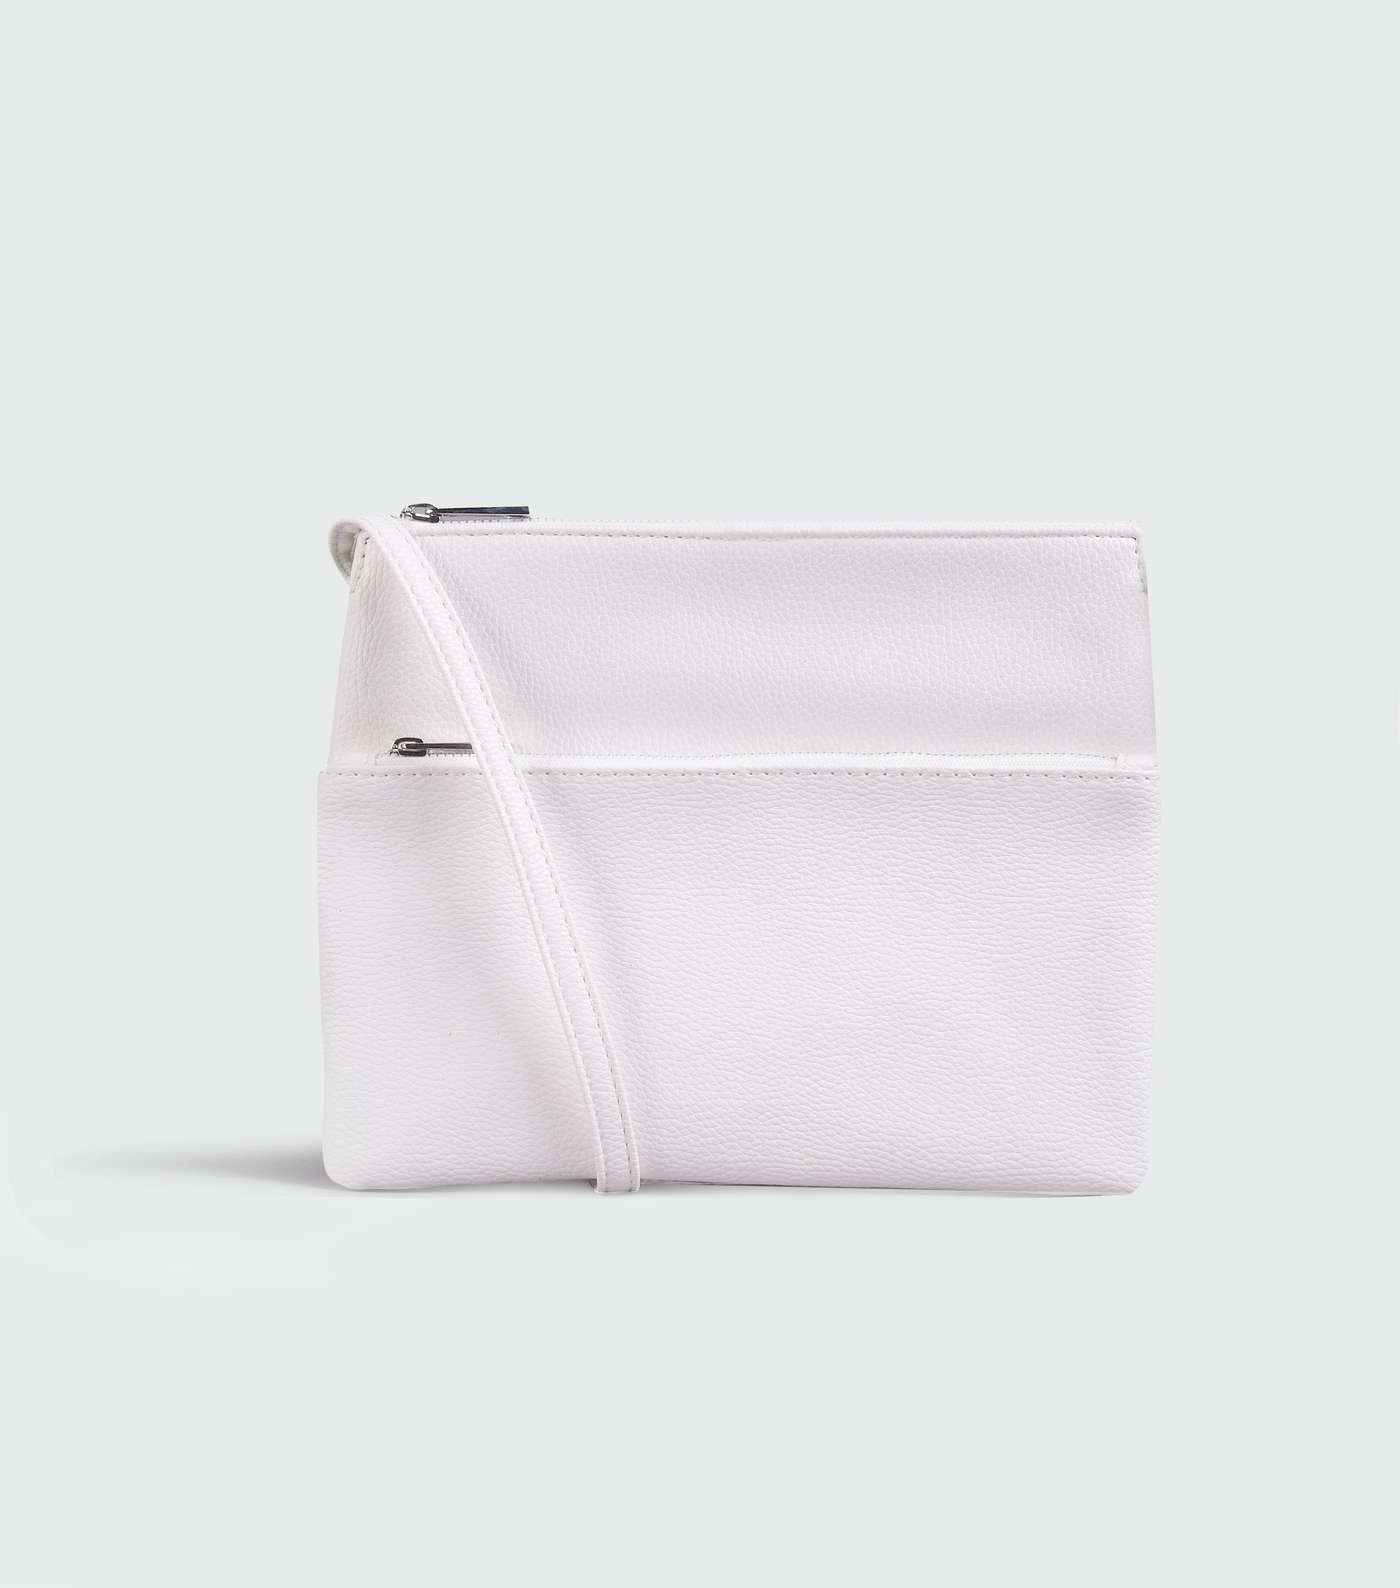 White Leather-Look Double Pocket Shoulder Bag